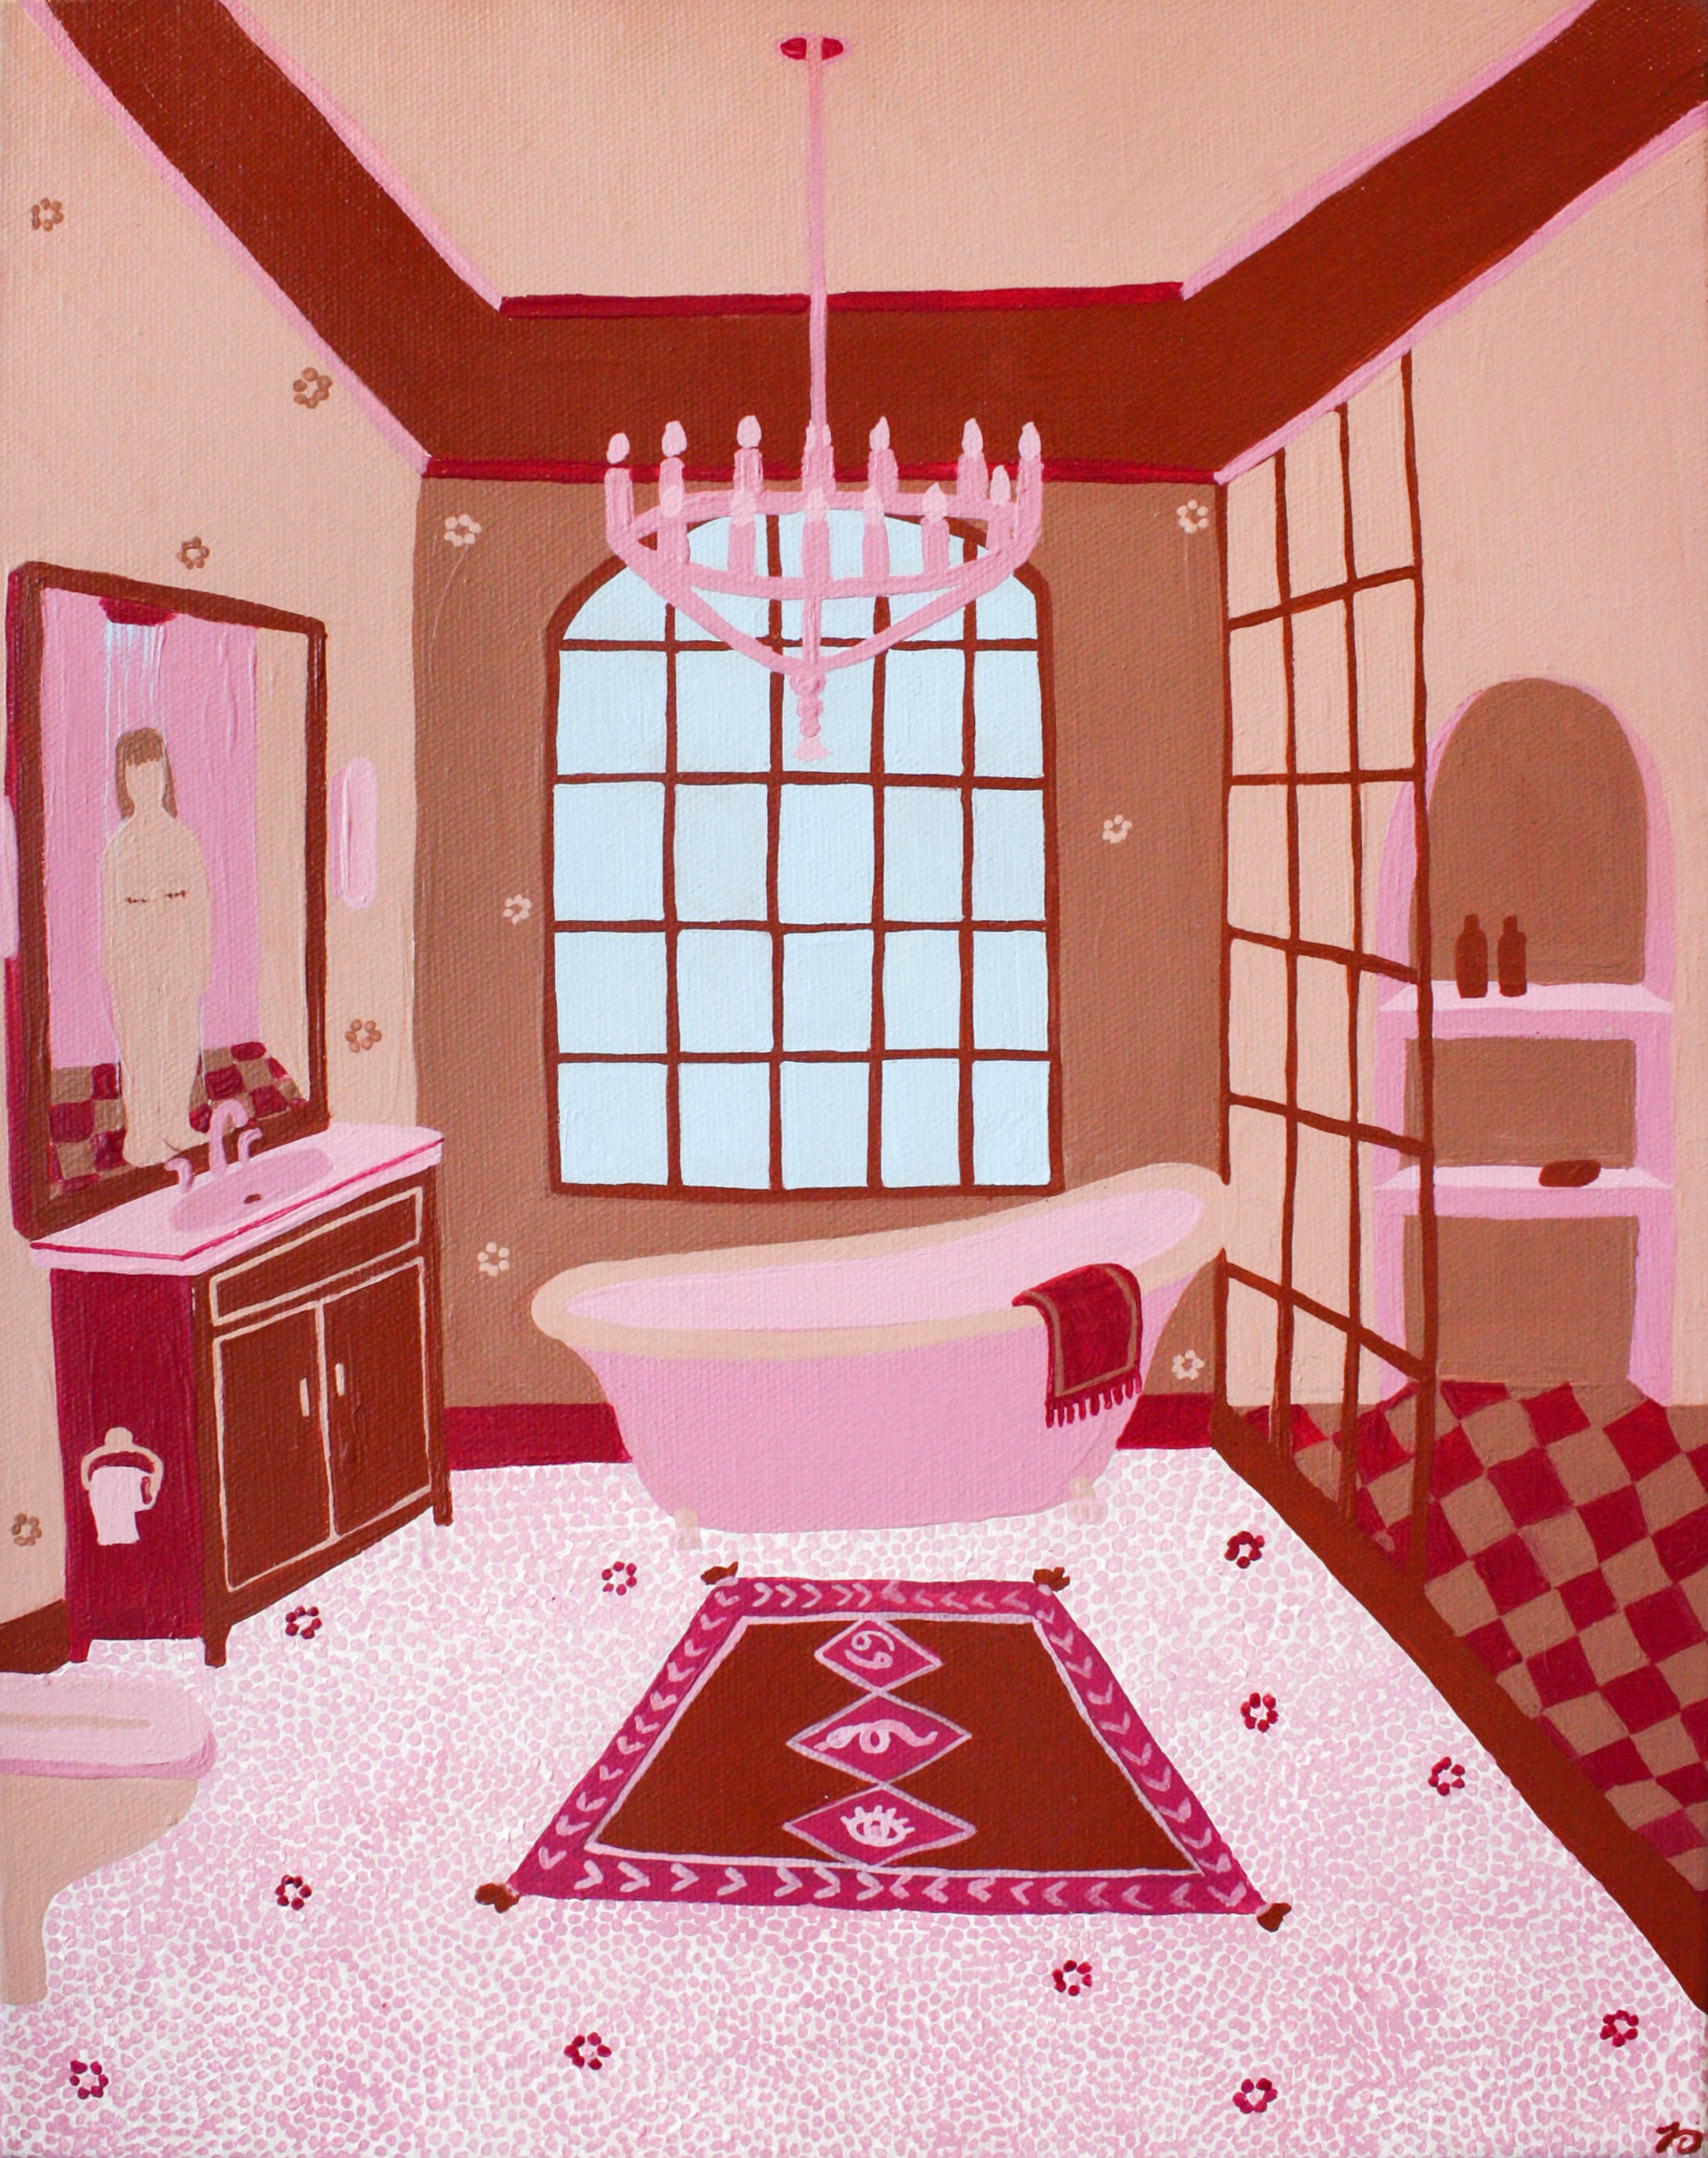 Washroom by Tess Davies